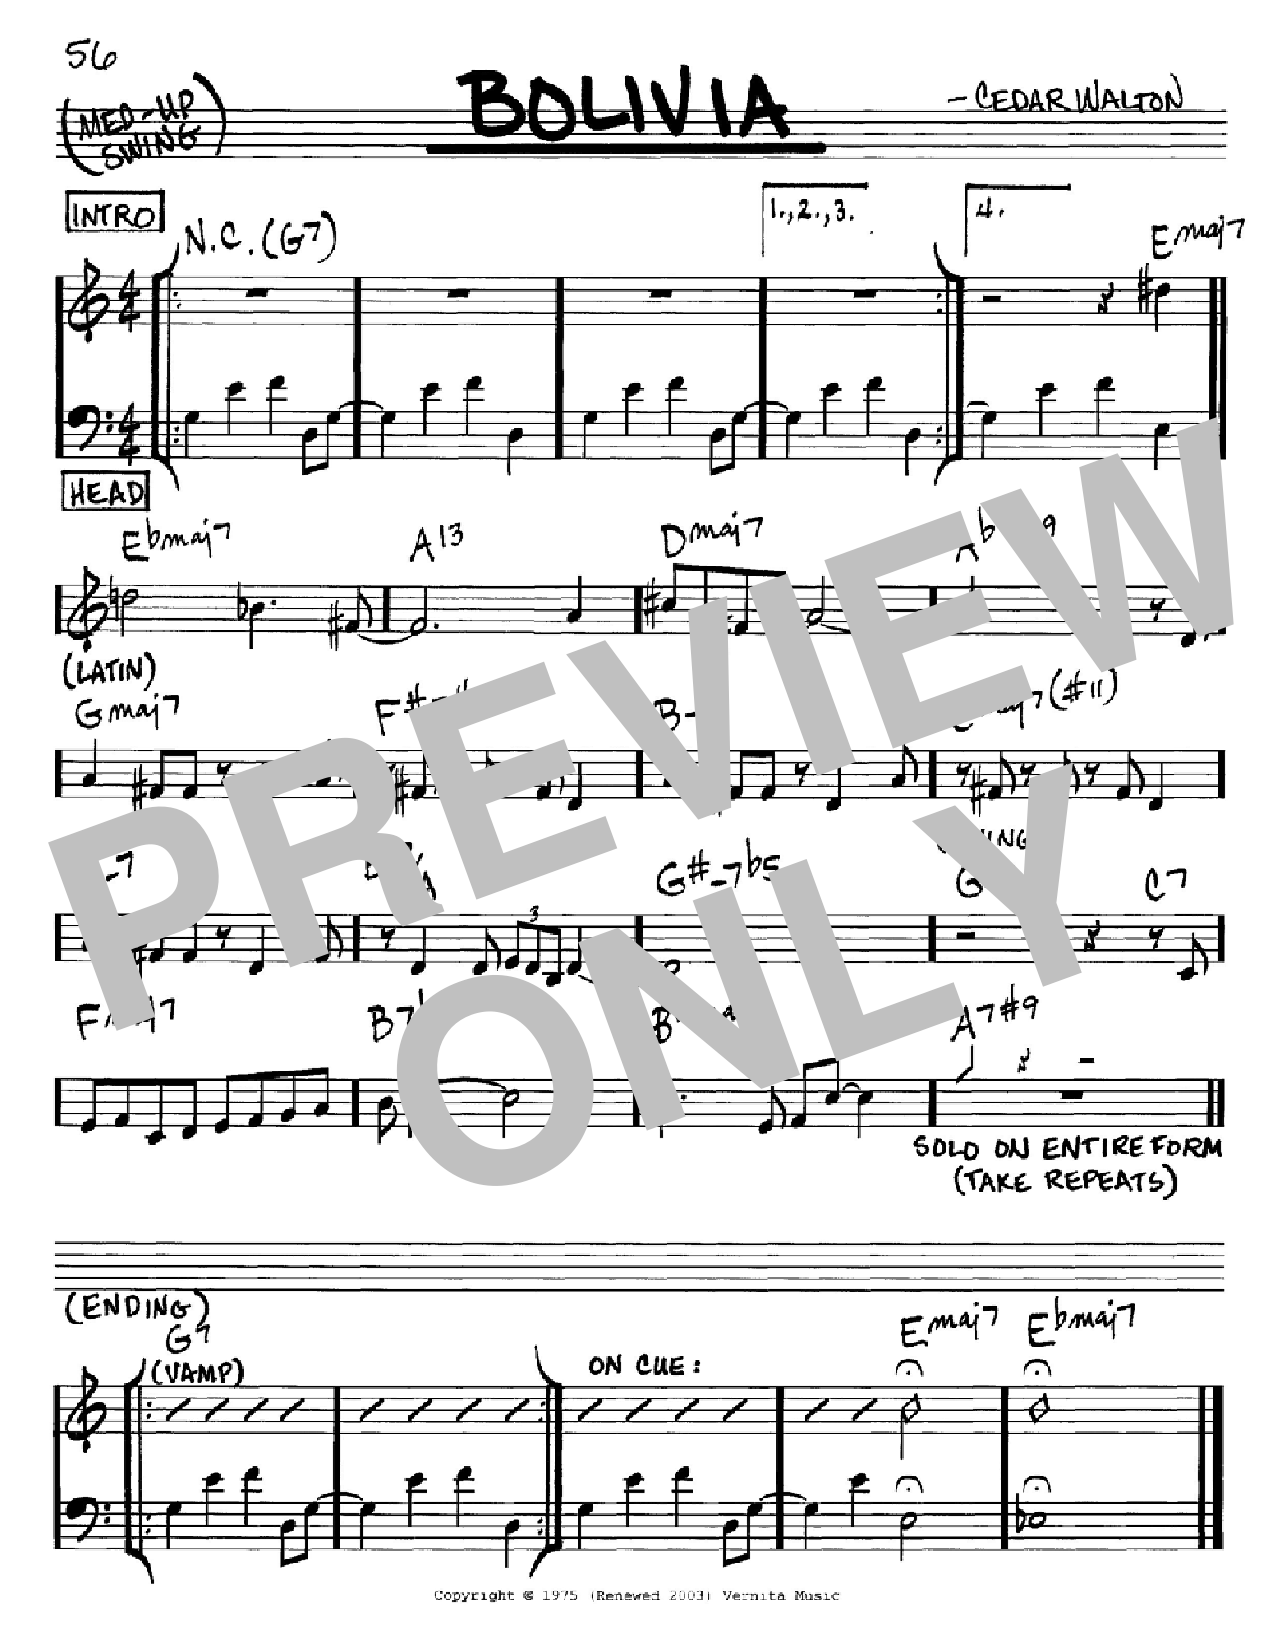 Cedar Walton Bolivia Sheet Music Notes & Chords for Real Book – Melody & Chords – C Instruments - Download or Print PDF